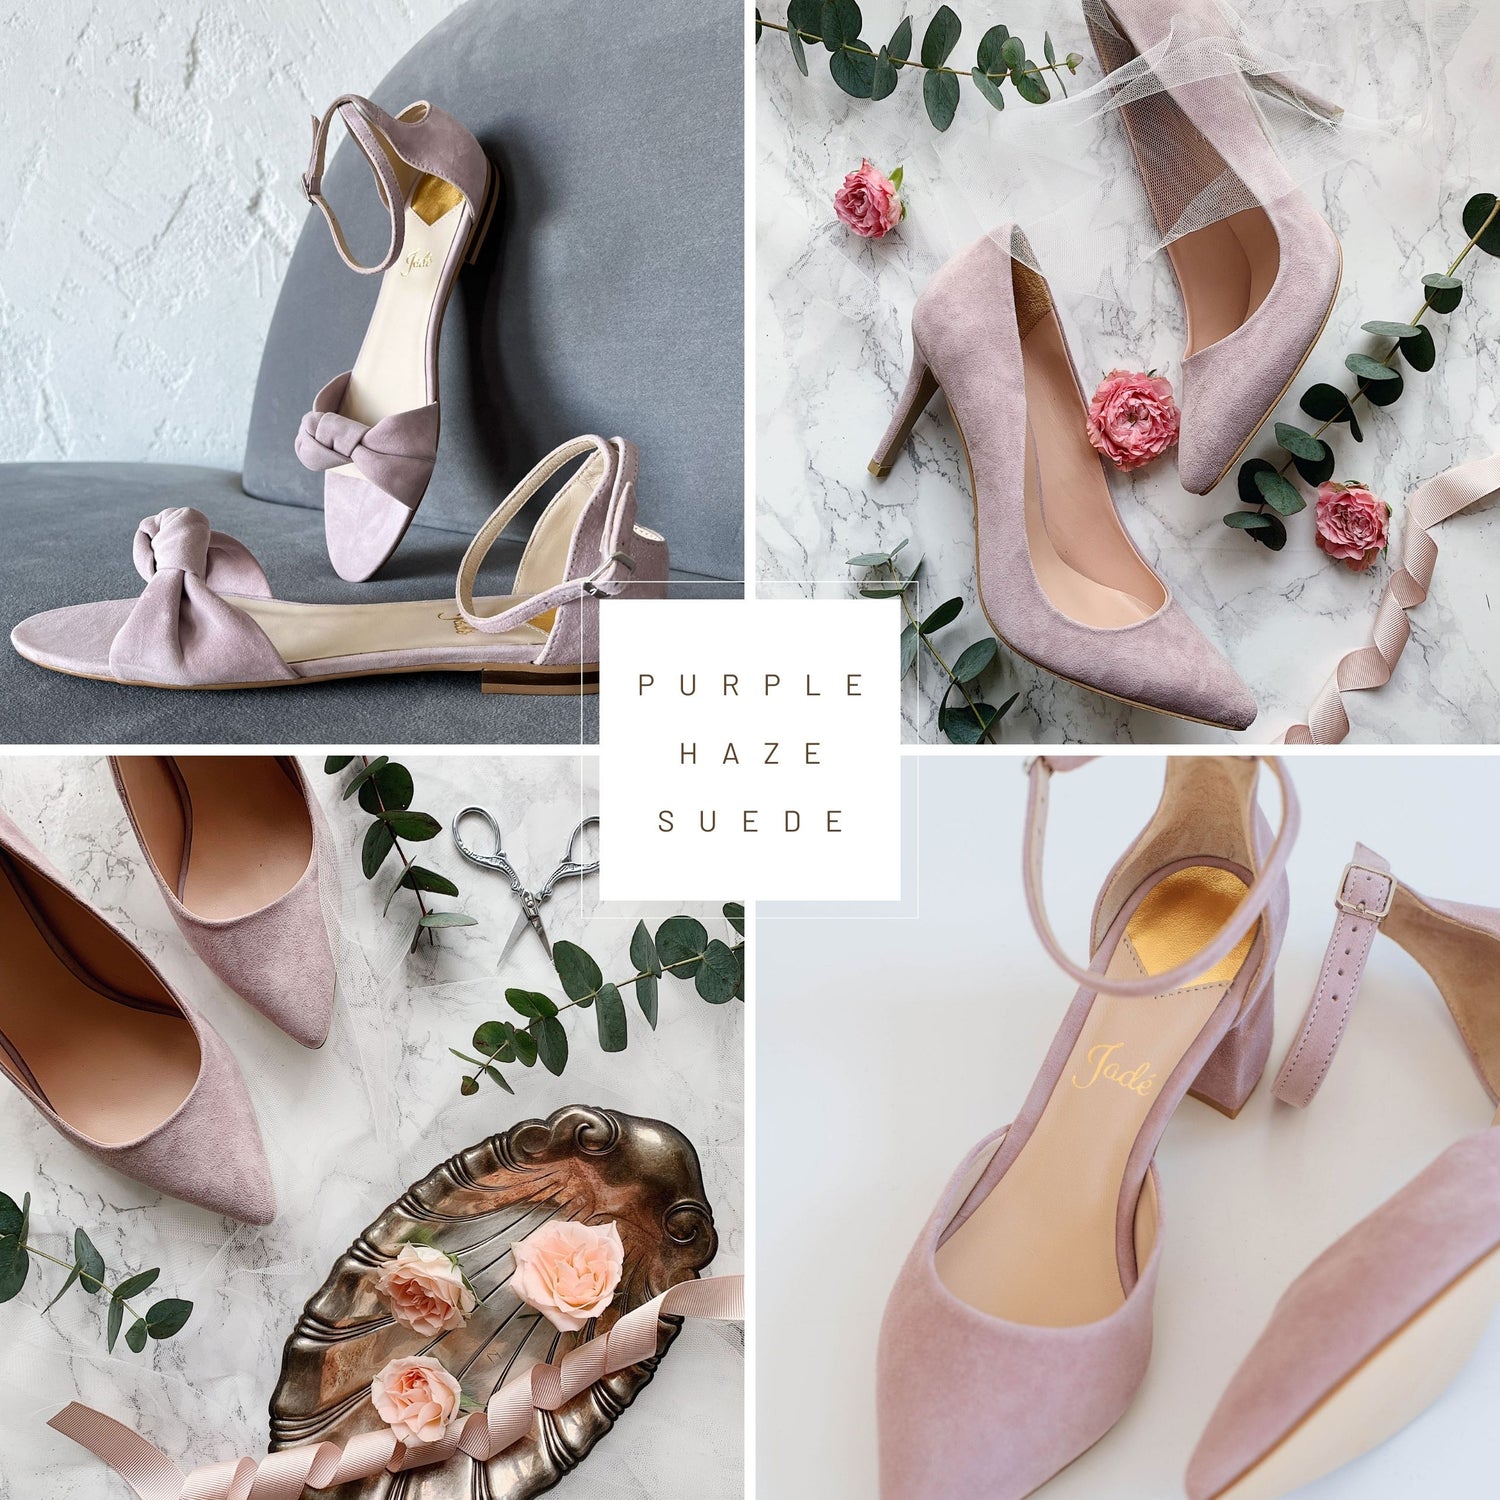 sandra-wedding-shoes